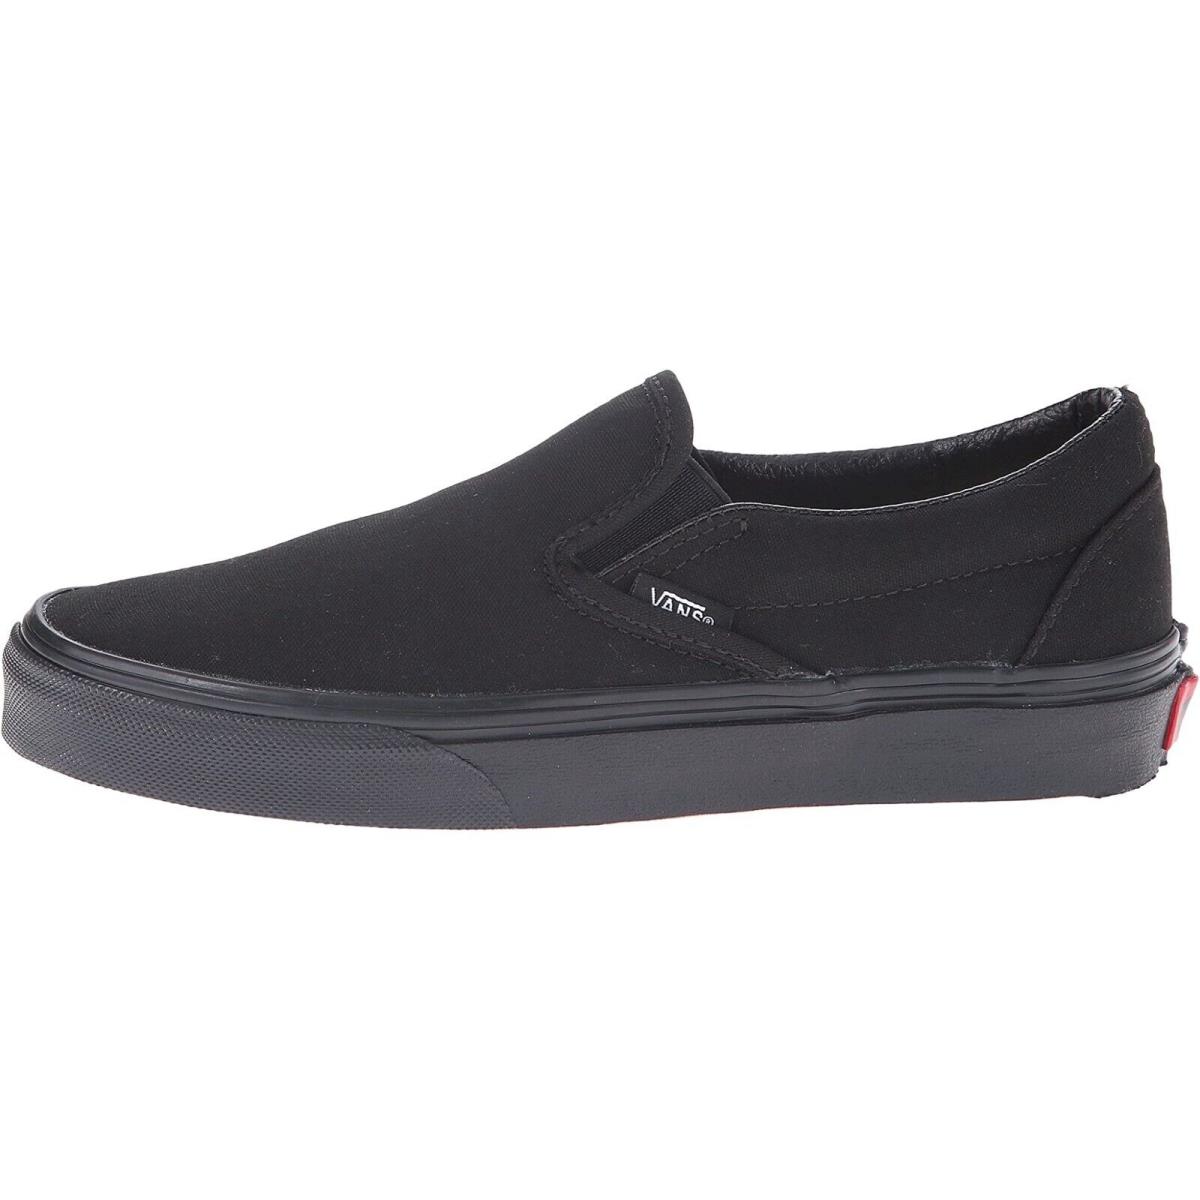 Vans Classic Slip-on Unisex Men Women Skate Shoes Canvas Sneakers Black/Black